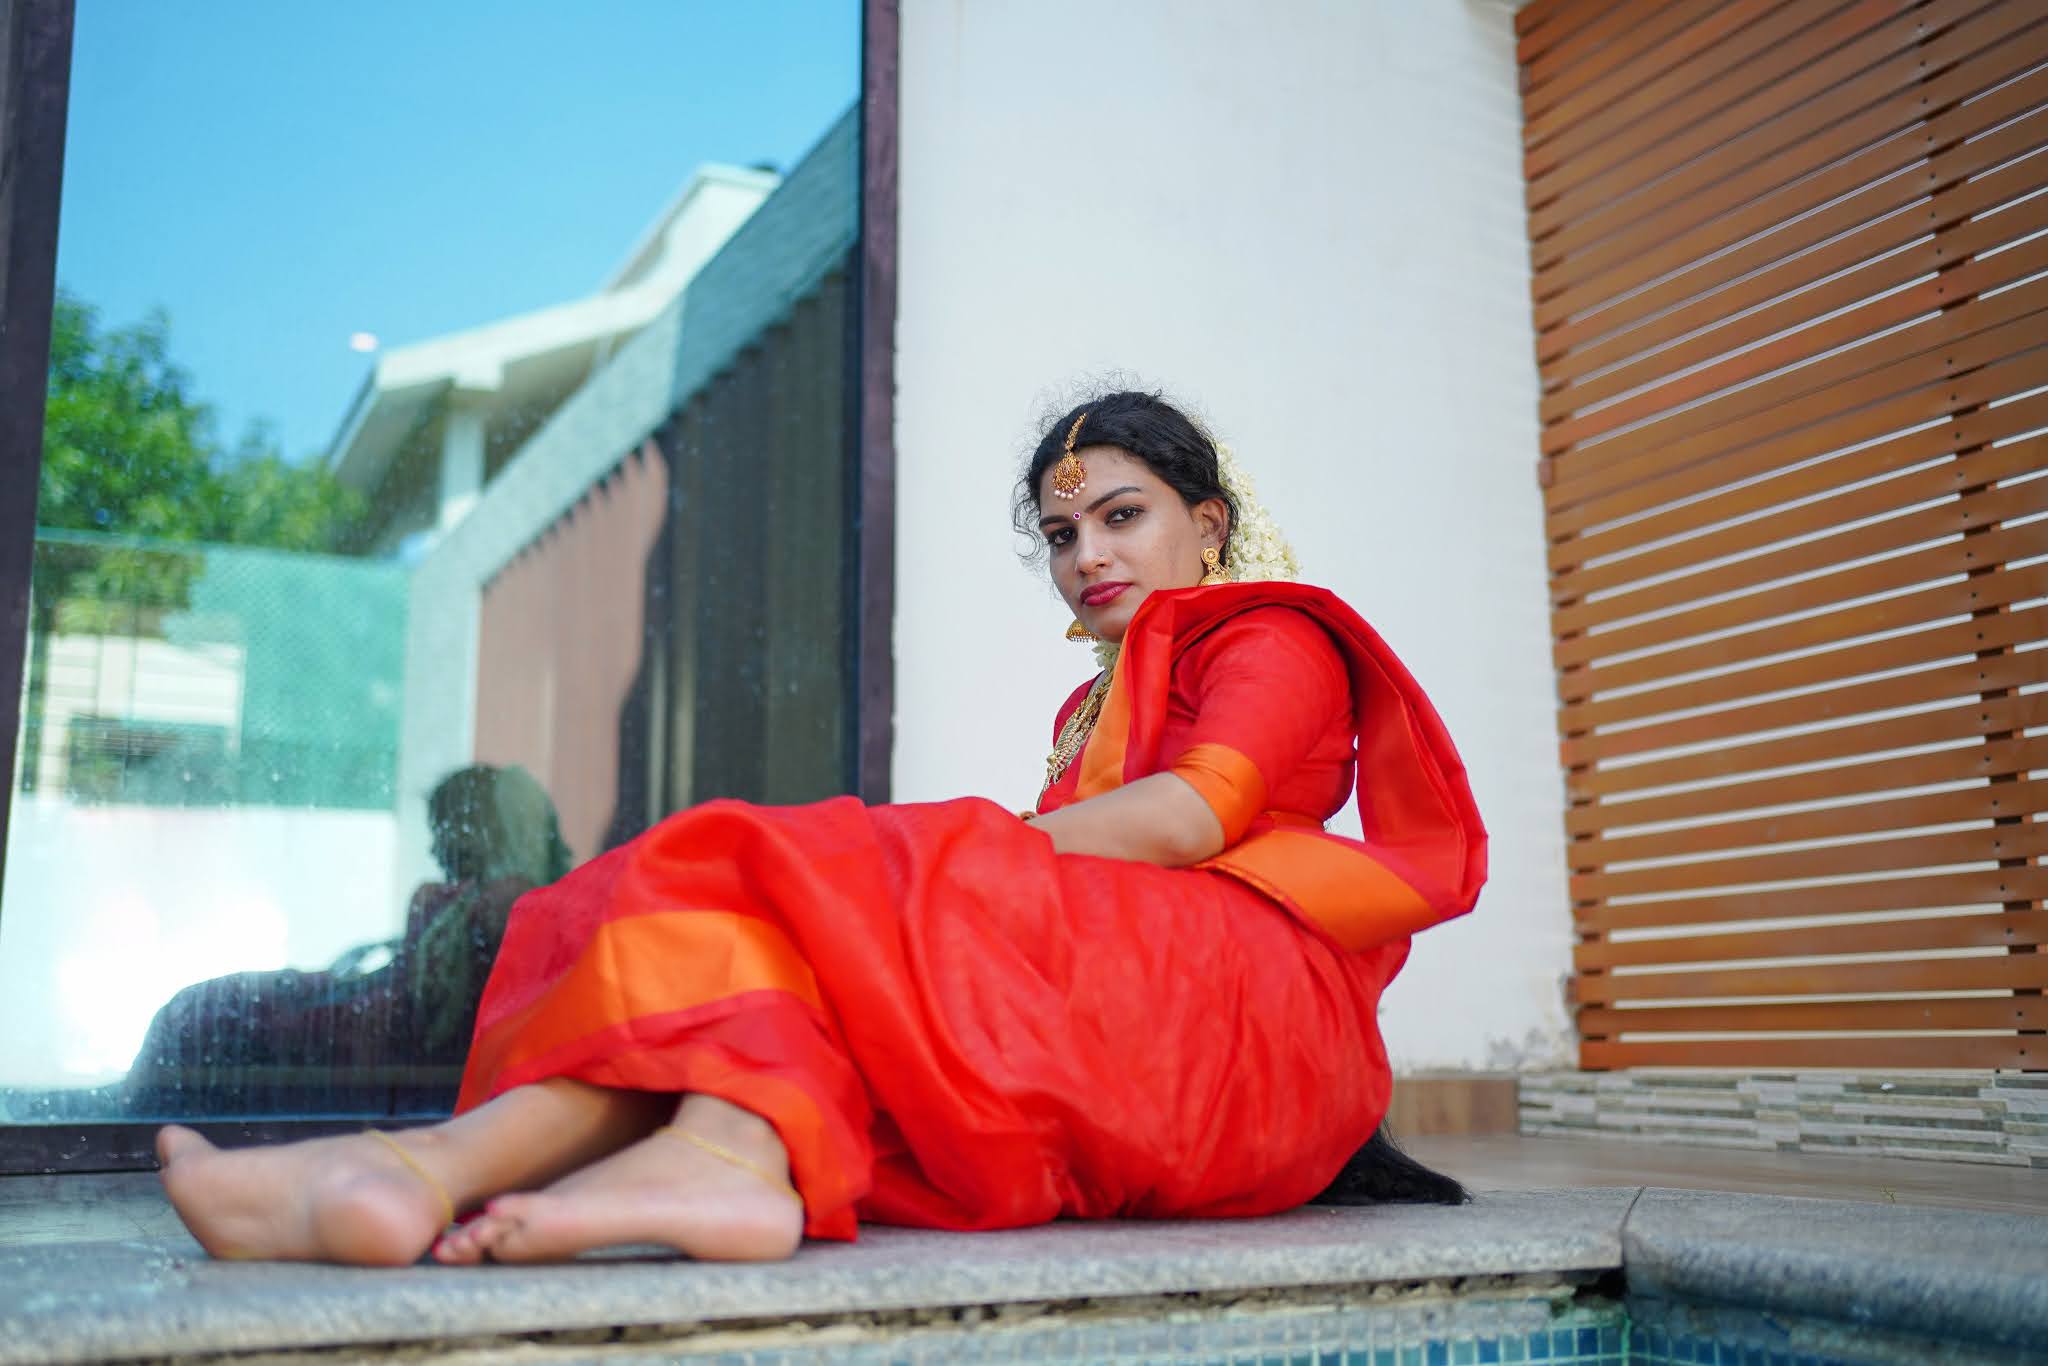 Resmi R Nair as Sensual Indian Bride photoshoot.